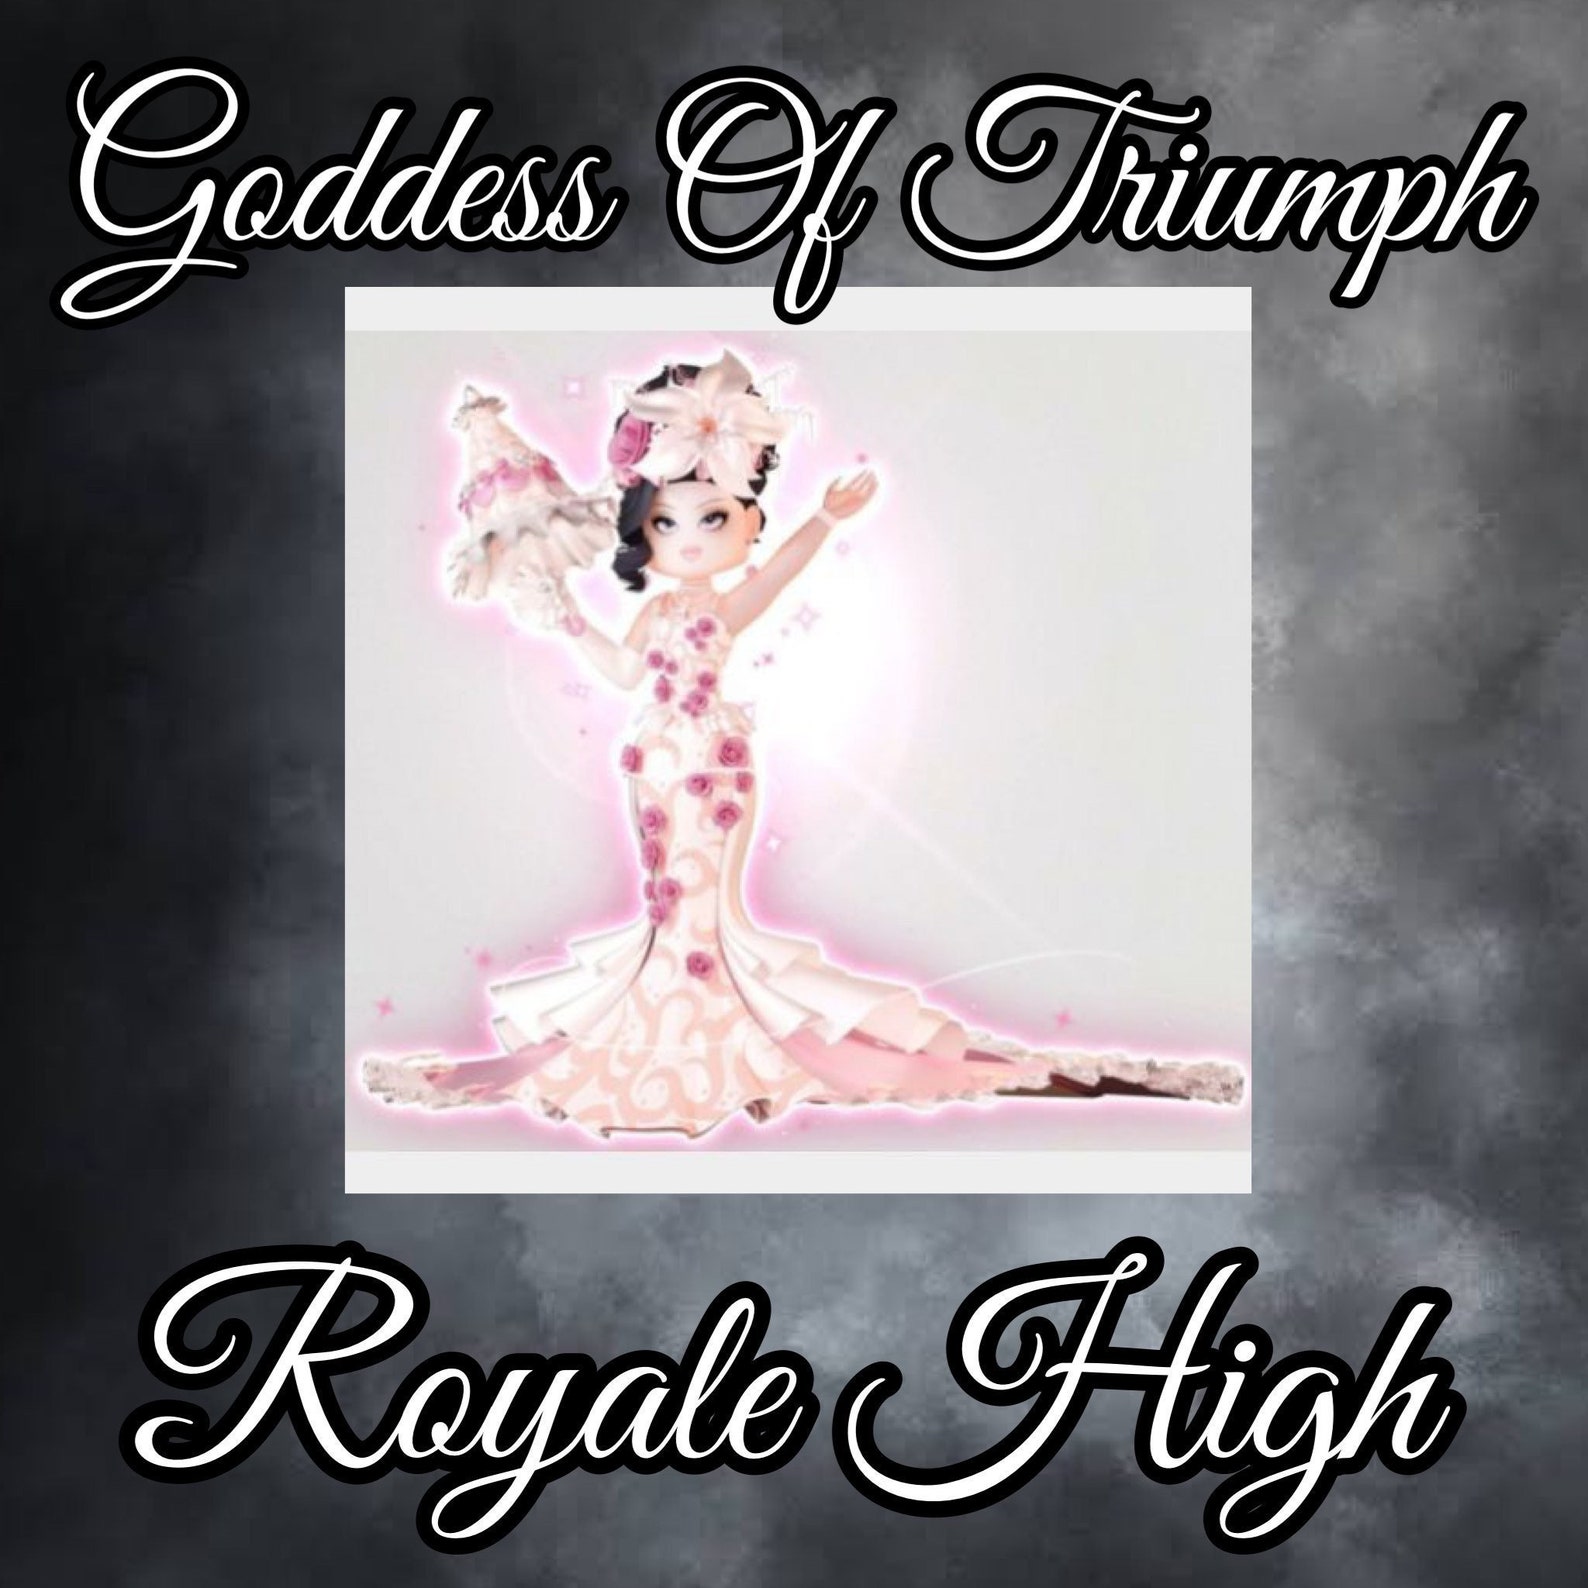 Goddess Of Triumph Set Includes Parasol Royale High Etsy